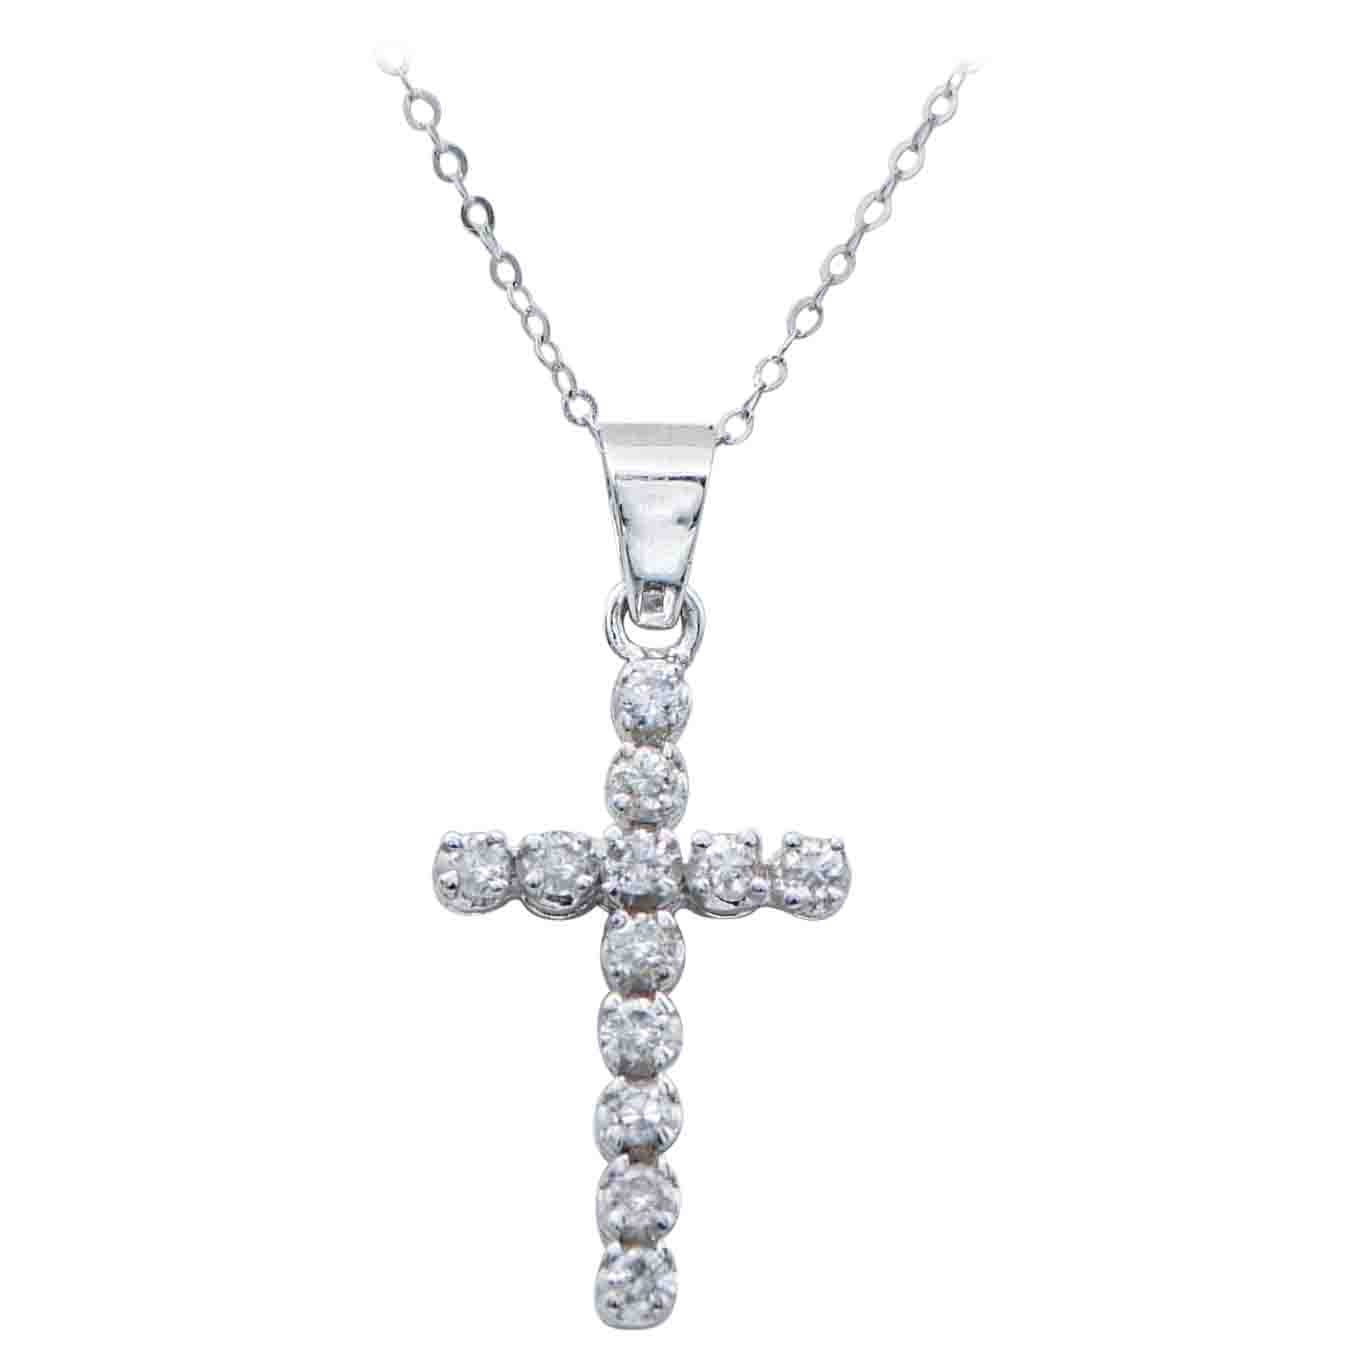 0.42 Carats Diamonds, White Gold Cross Pendant Necklace. For Sale